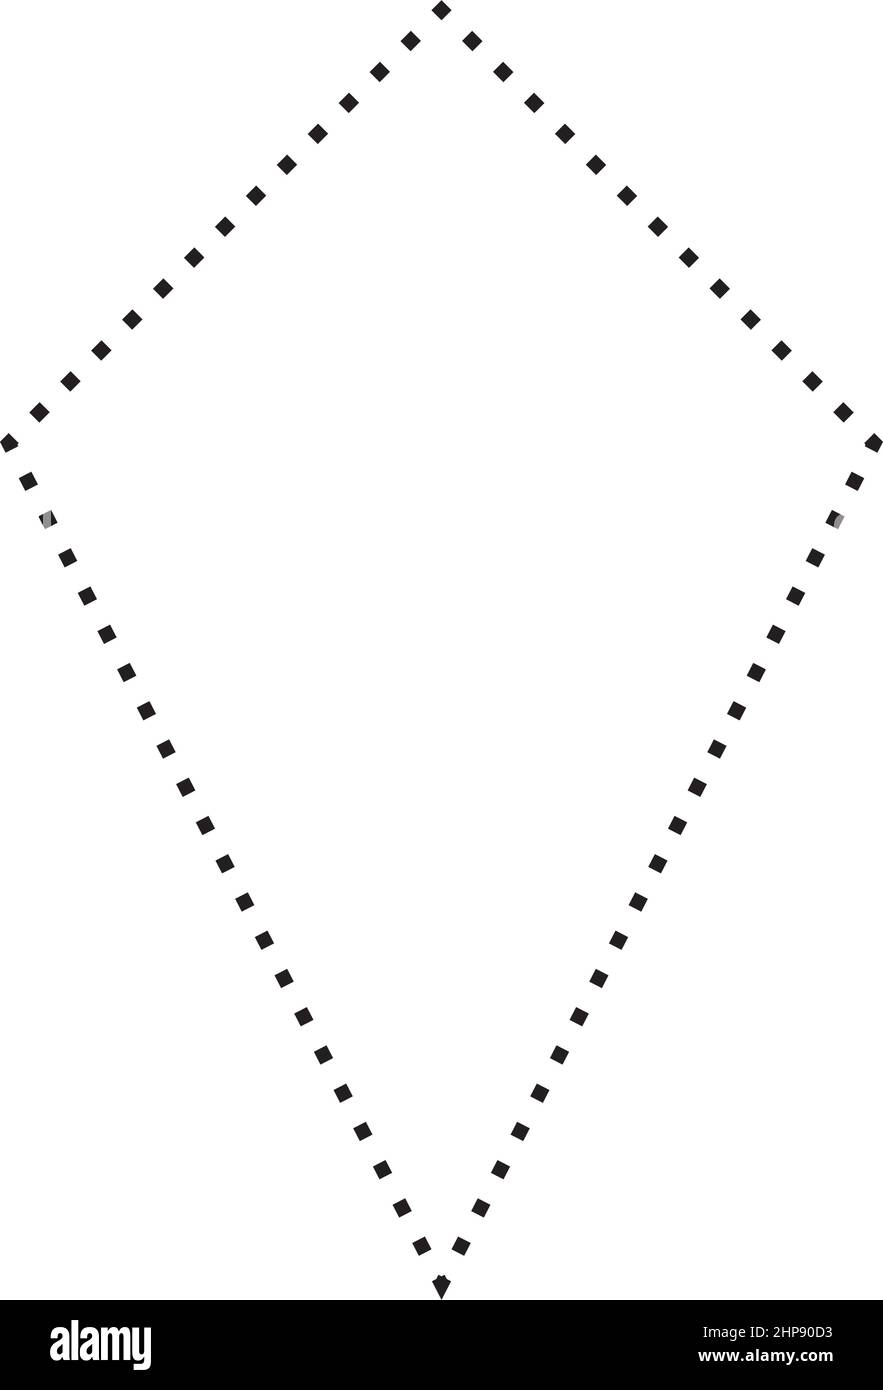 Kite Shape gestrichelt Symbol Vektor-Symbol für kreative Grafik-Design ui-Element in einem Piktogramm Illustration Stock Vektor